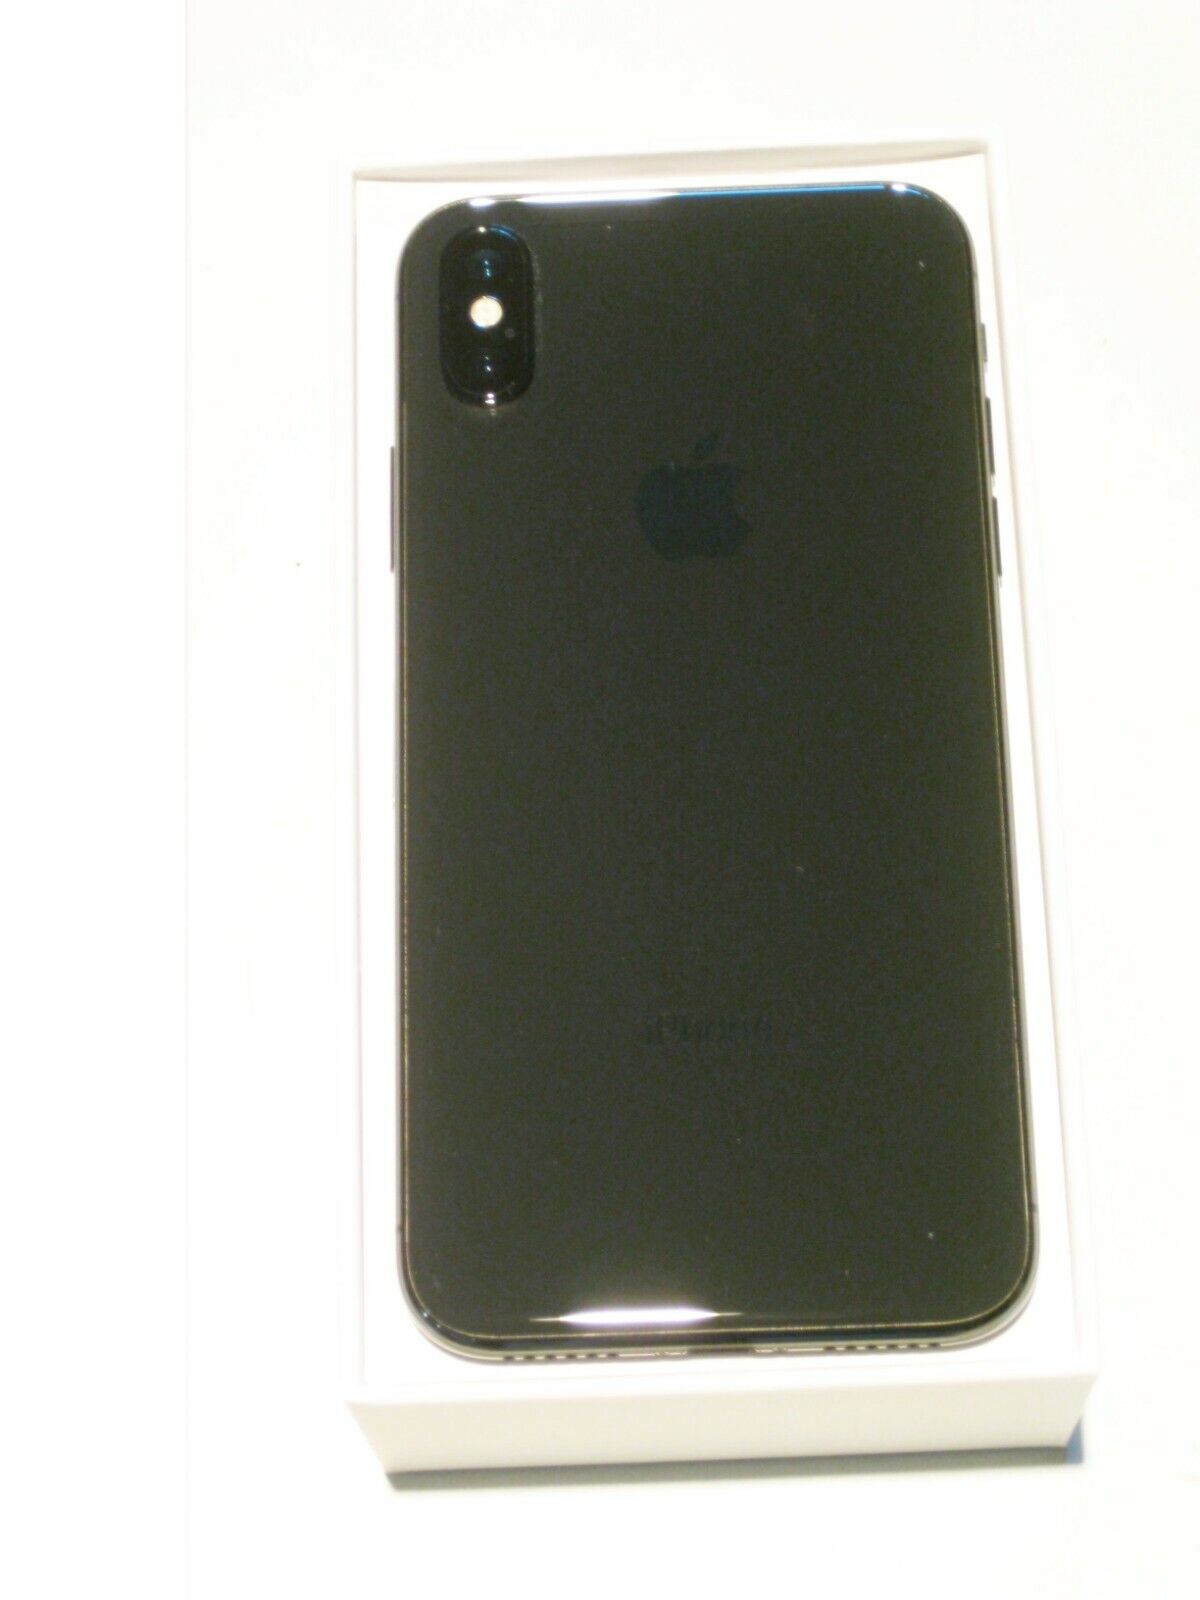 iPhone X Space Gray 256 GB au スマートフォン本体 スマートフォン/携帯電話 家電・スマホ・カメラ 販売数No.1